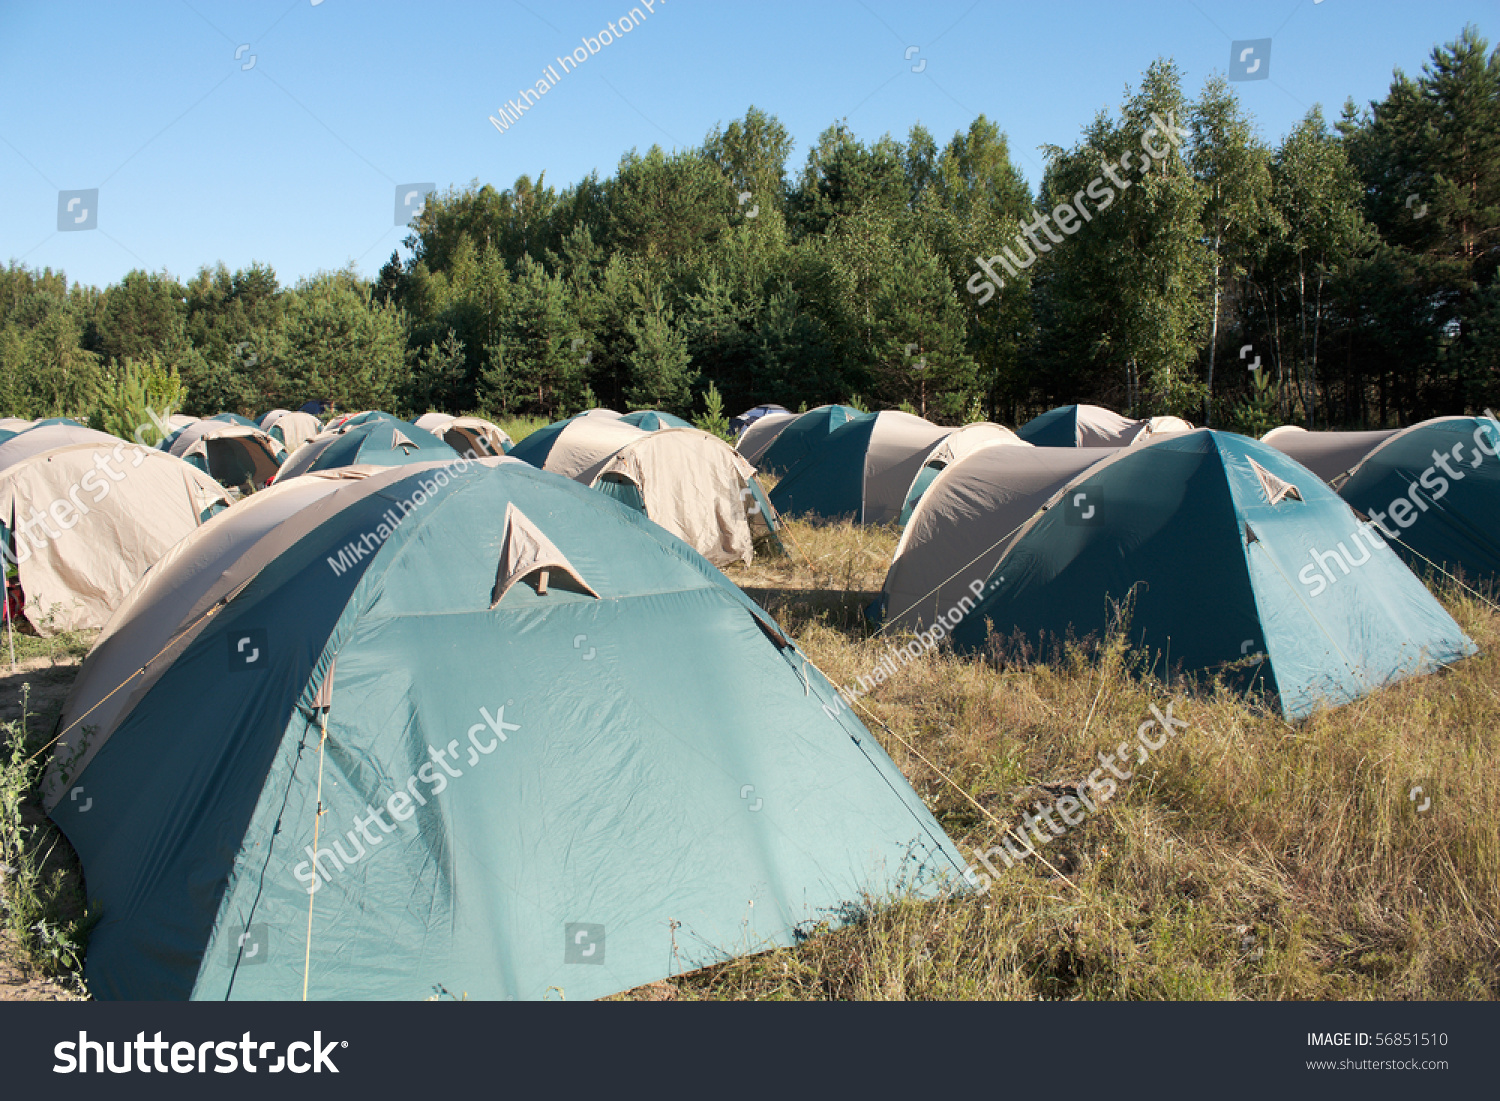 Camping. Many tents. Nobody. Summer. #56851510